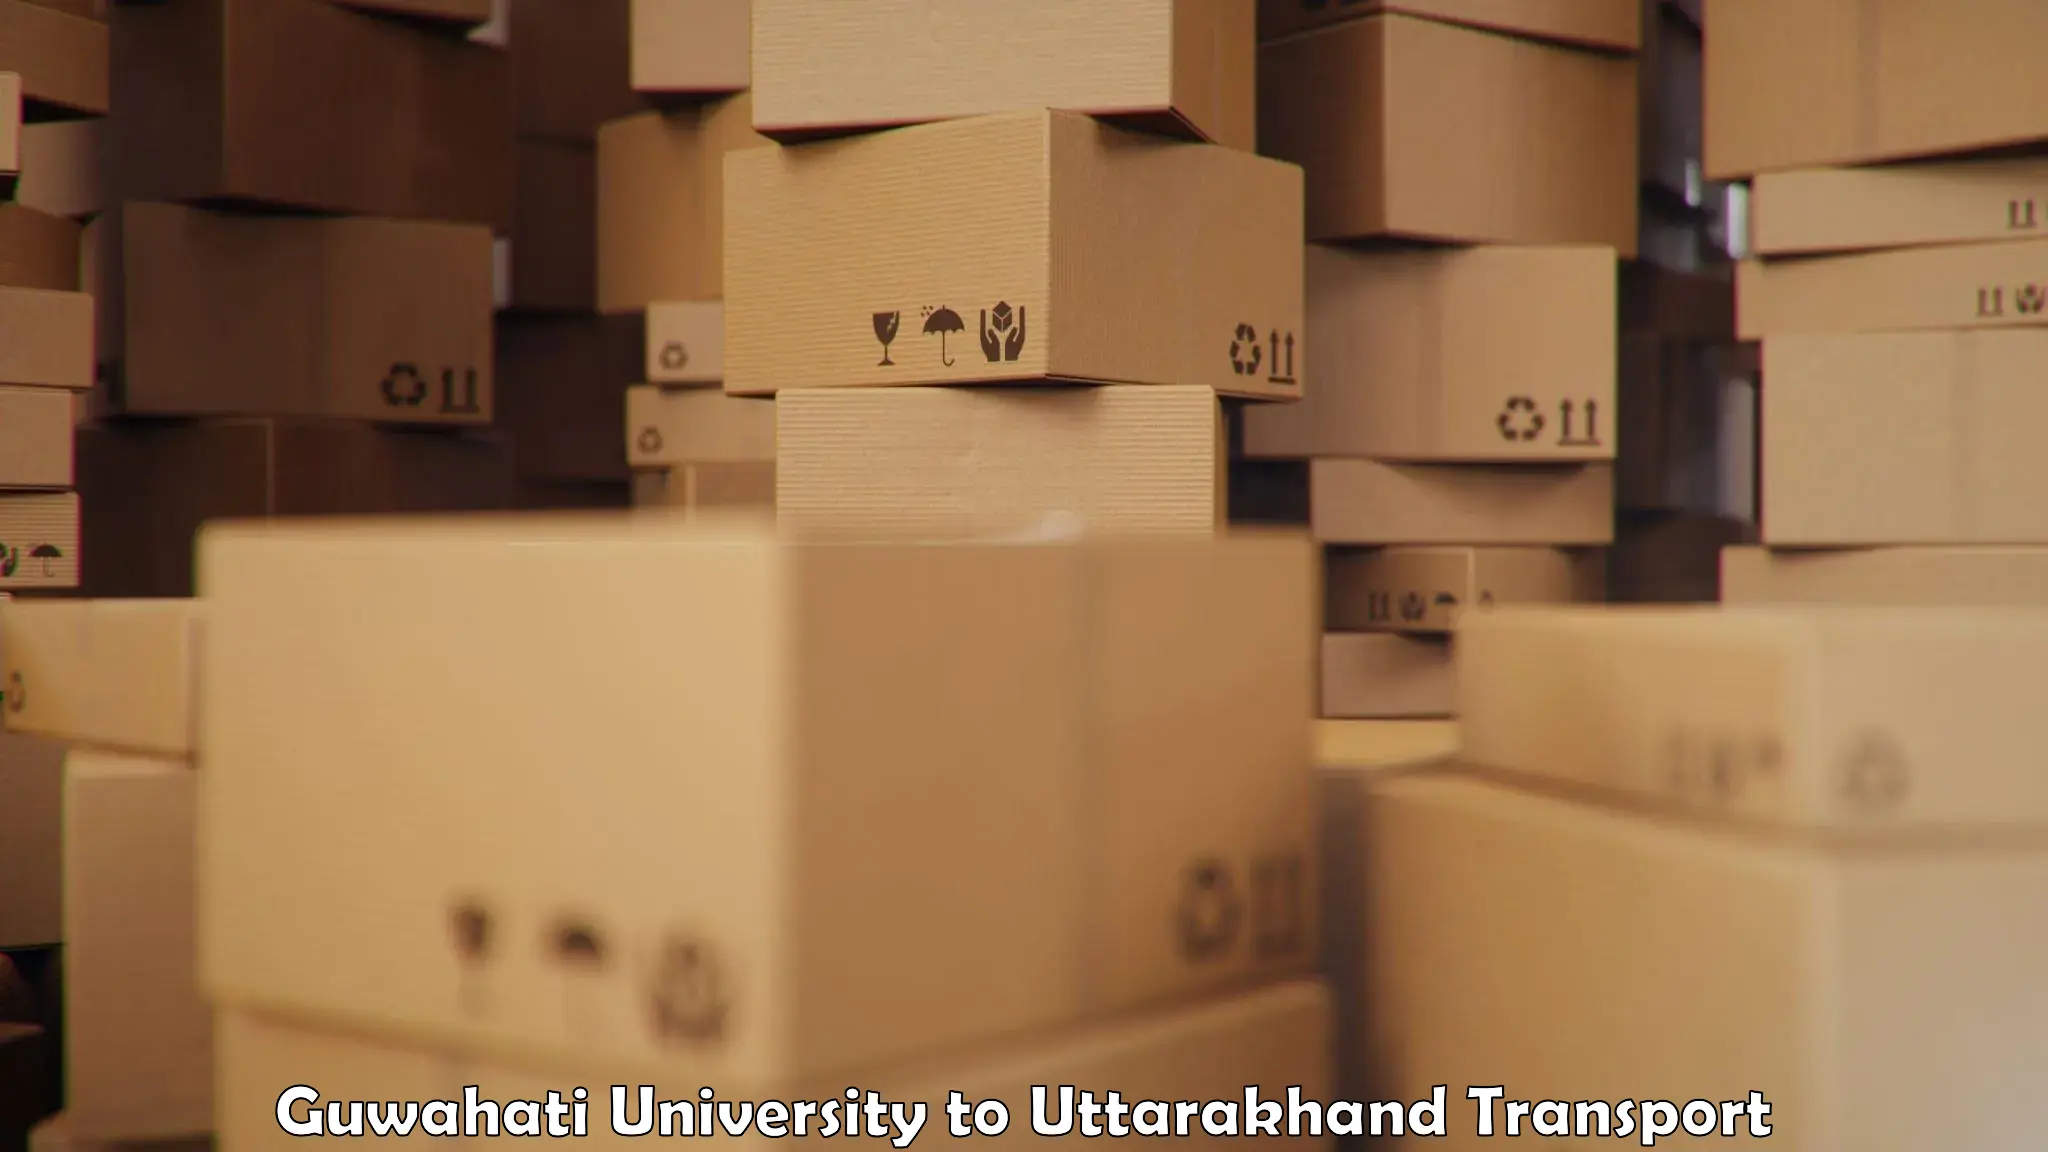 Online transport service Guwahati University to Dehradun